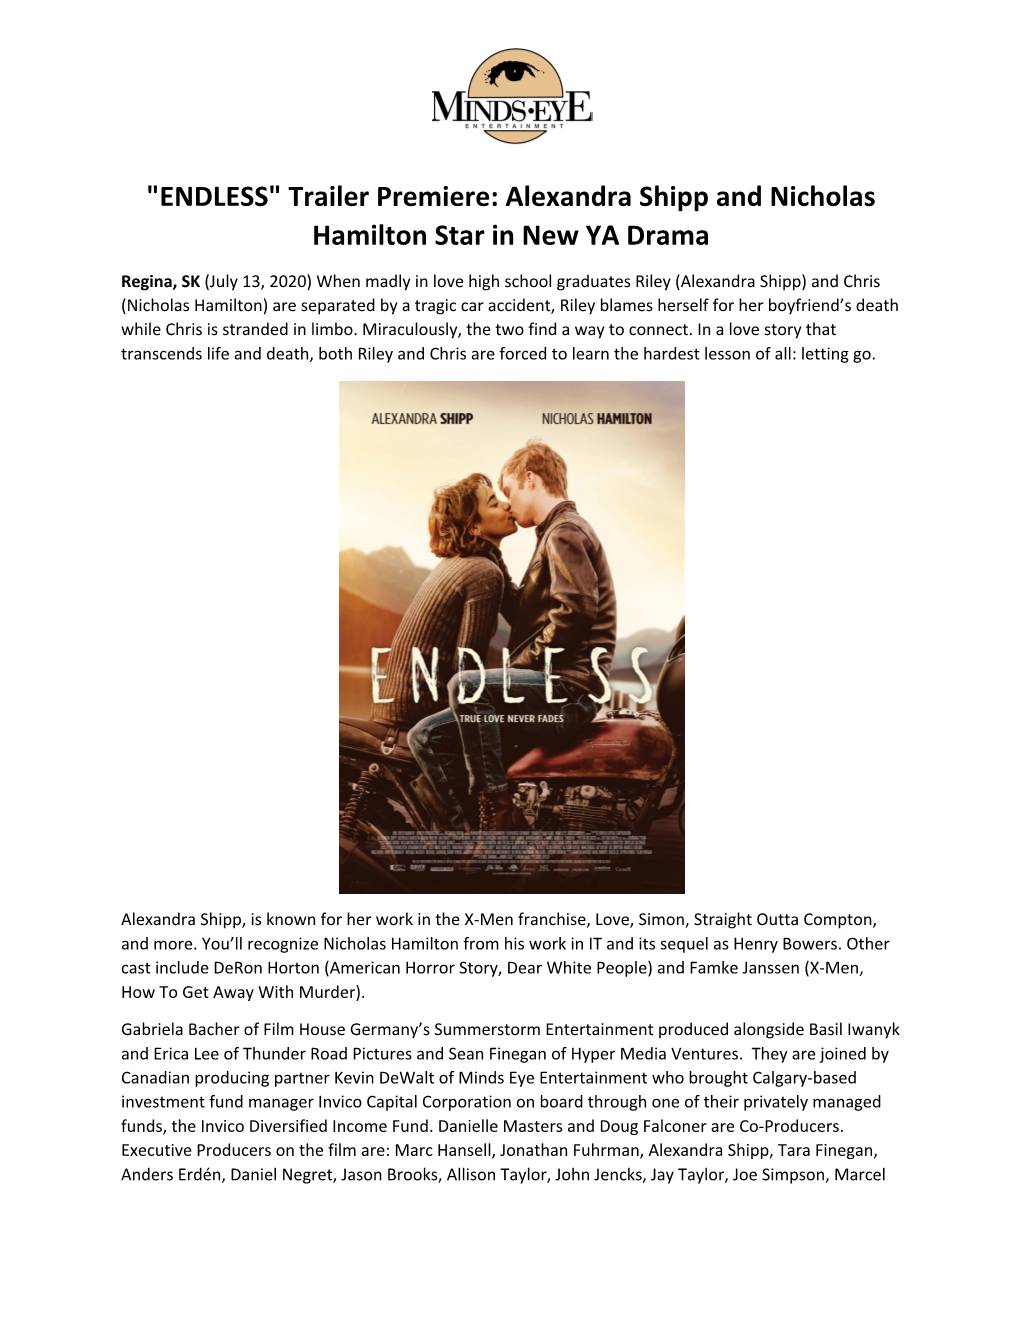 "ENDLESS" Trailer Premiere: Alexandra Shipp and Nicholas Hamilton Star in New YA Drama